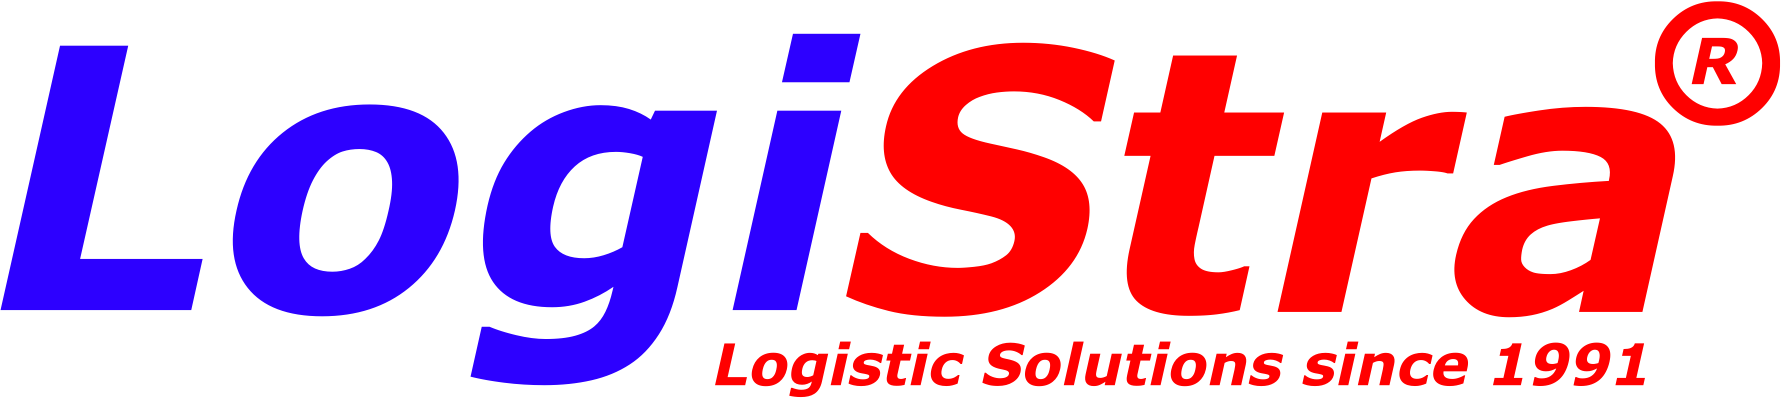 Logistra GmbH